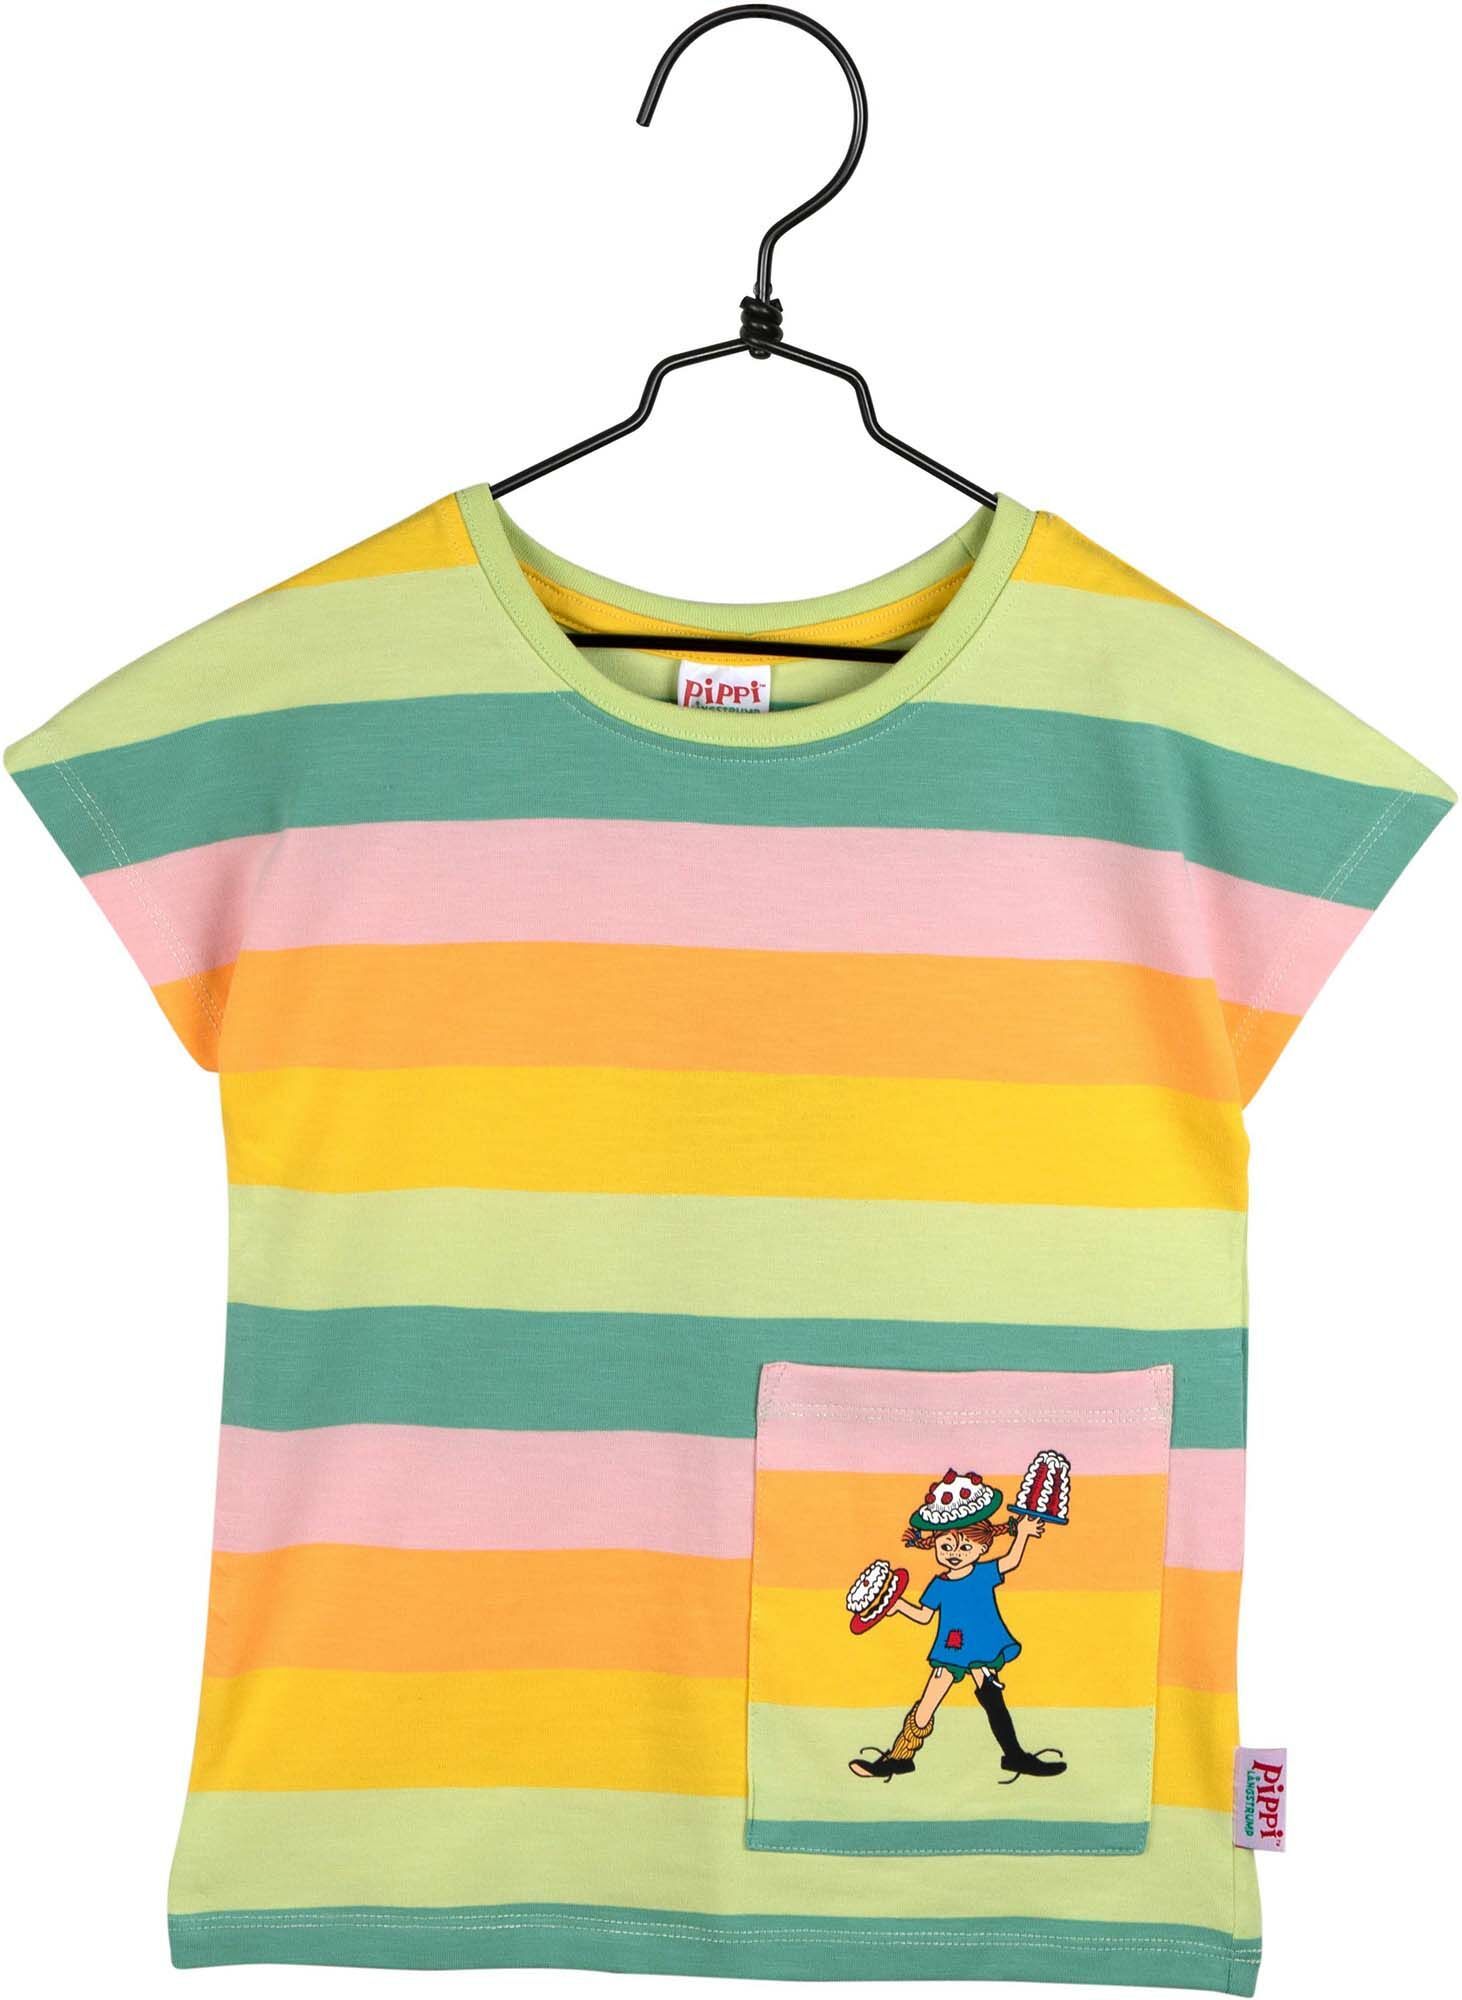 Pippi Långstrump Regnbåge T-Shirt Grön 116